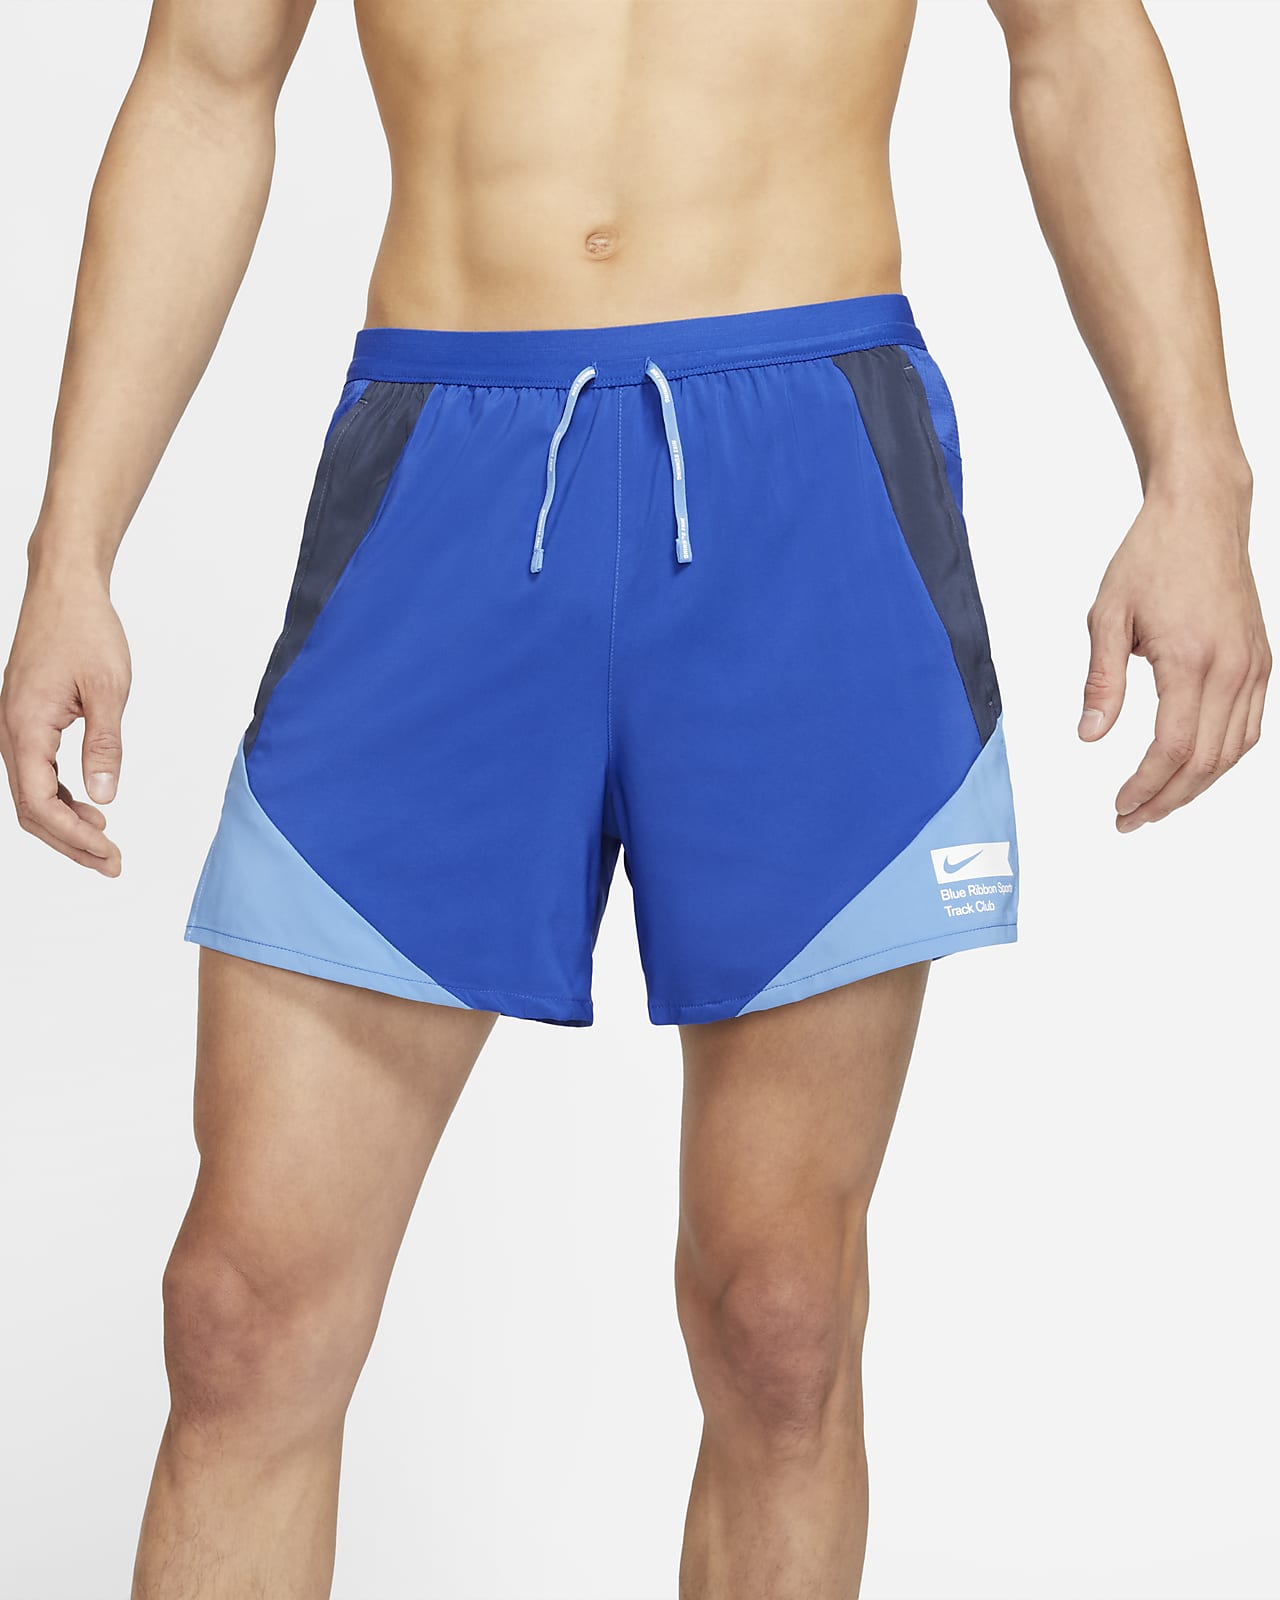 nike liner shorts